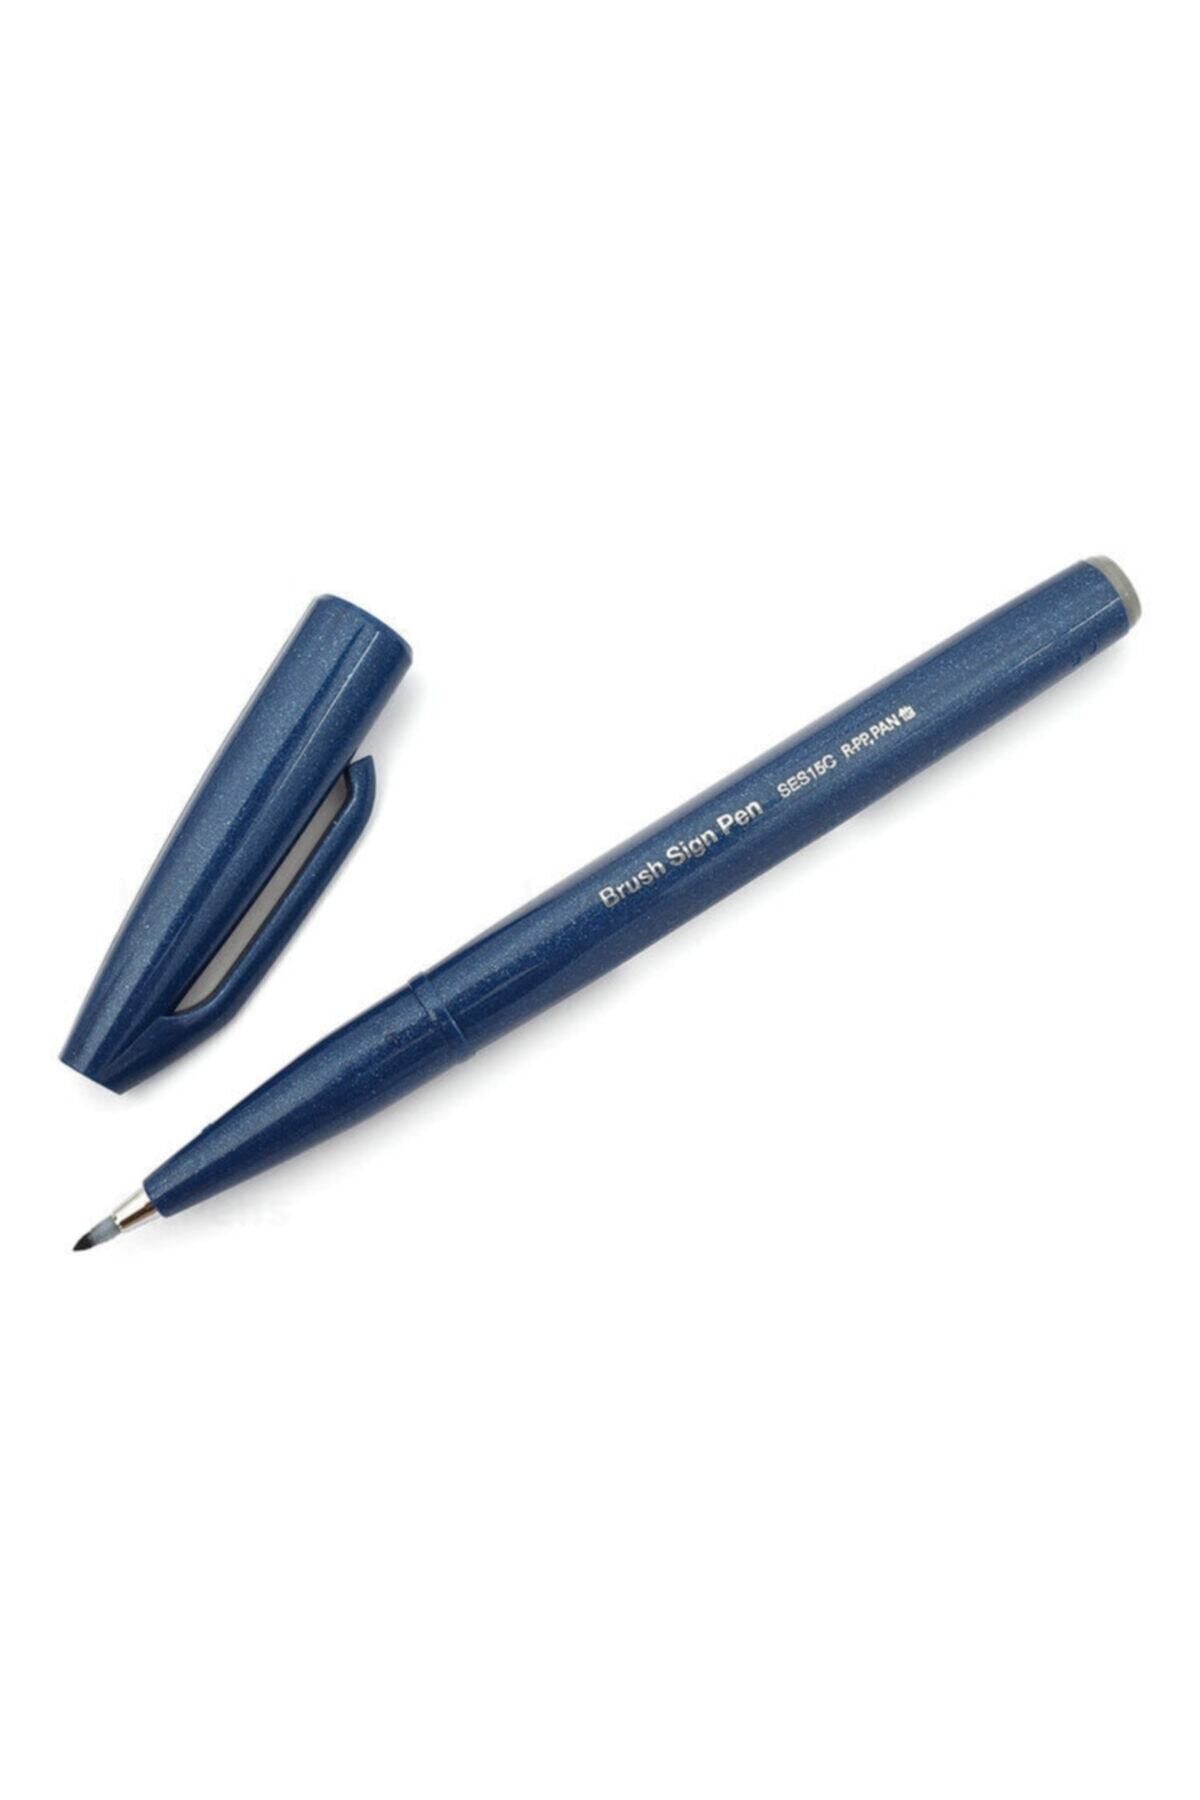 Pentel Brush Sign Pen Blue-black